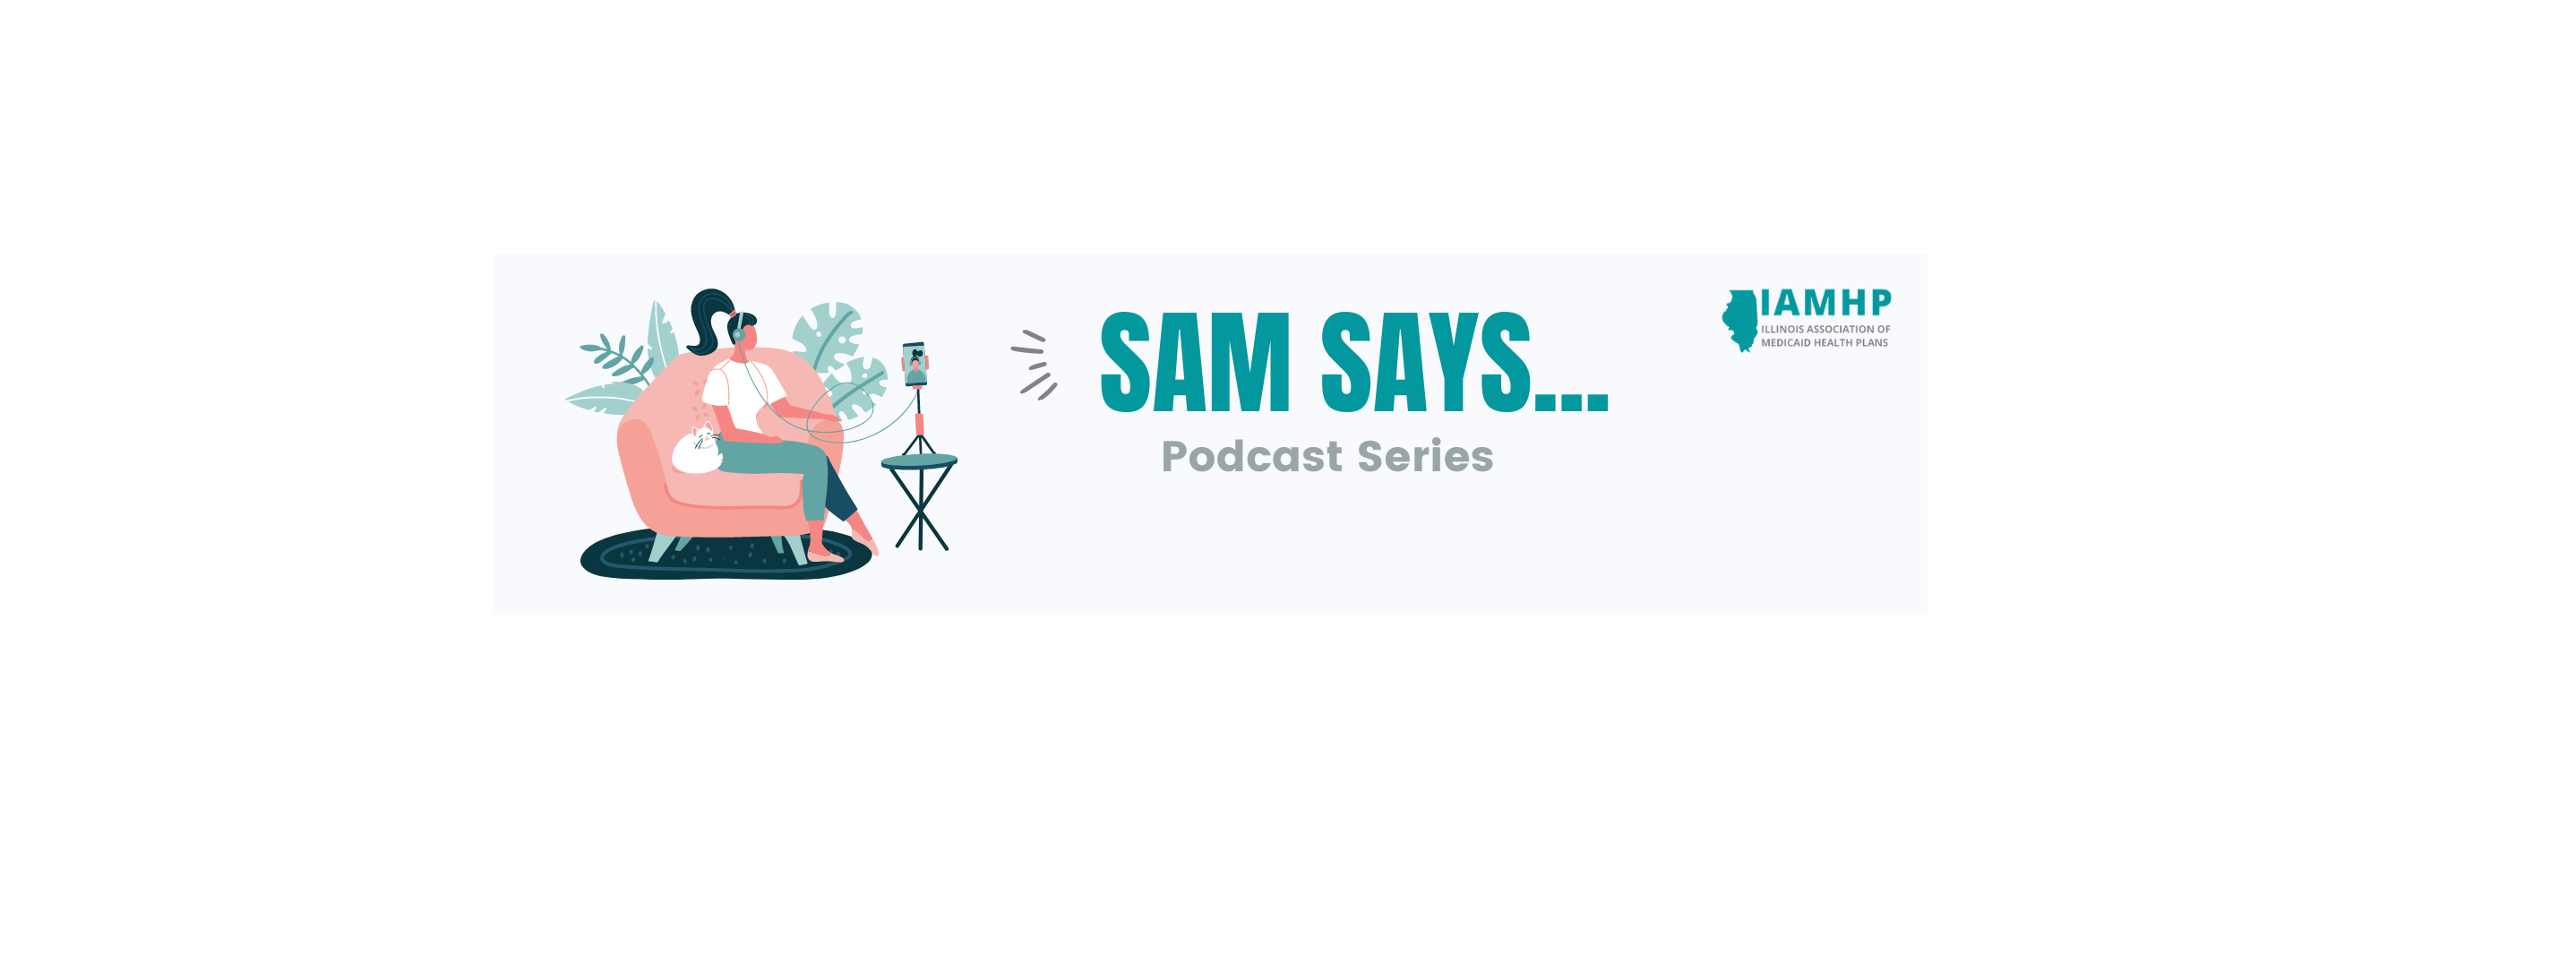 sam says podcast series